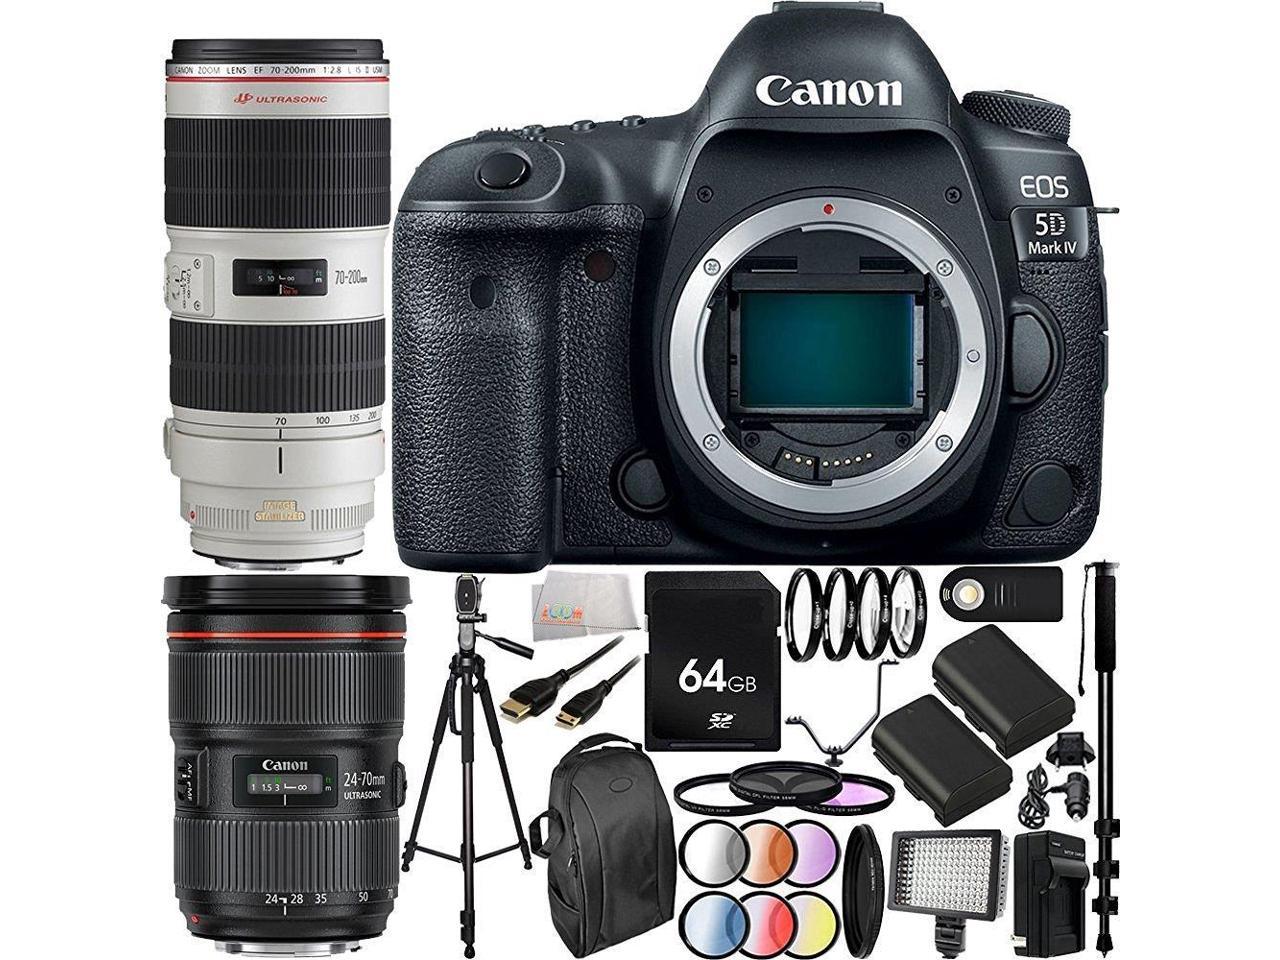 Canon EOS 5D Mark IV DSLR Camera with EF 24-70mm f/2.8L II USM Lens